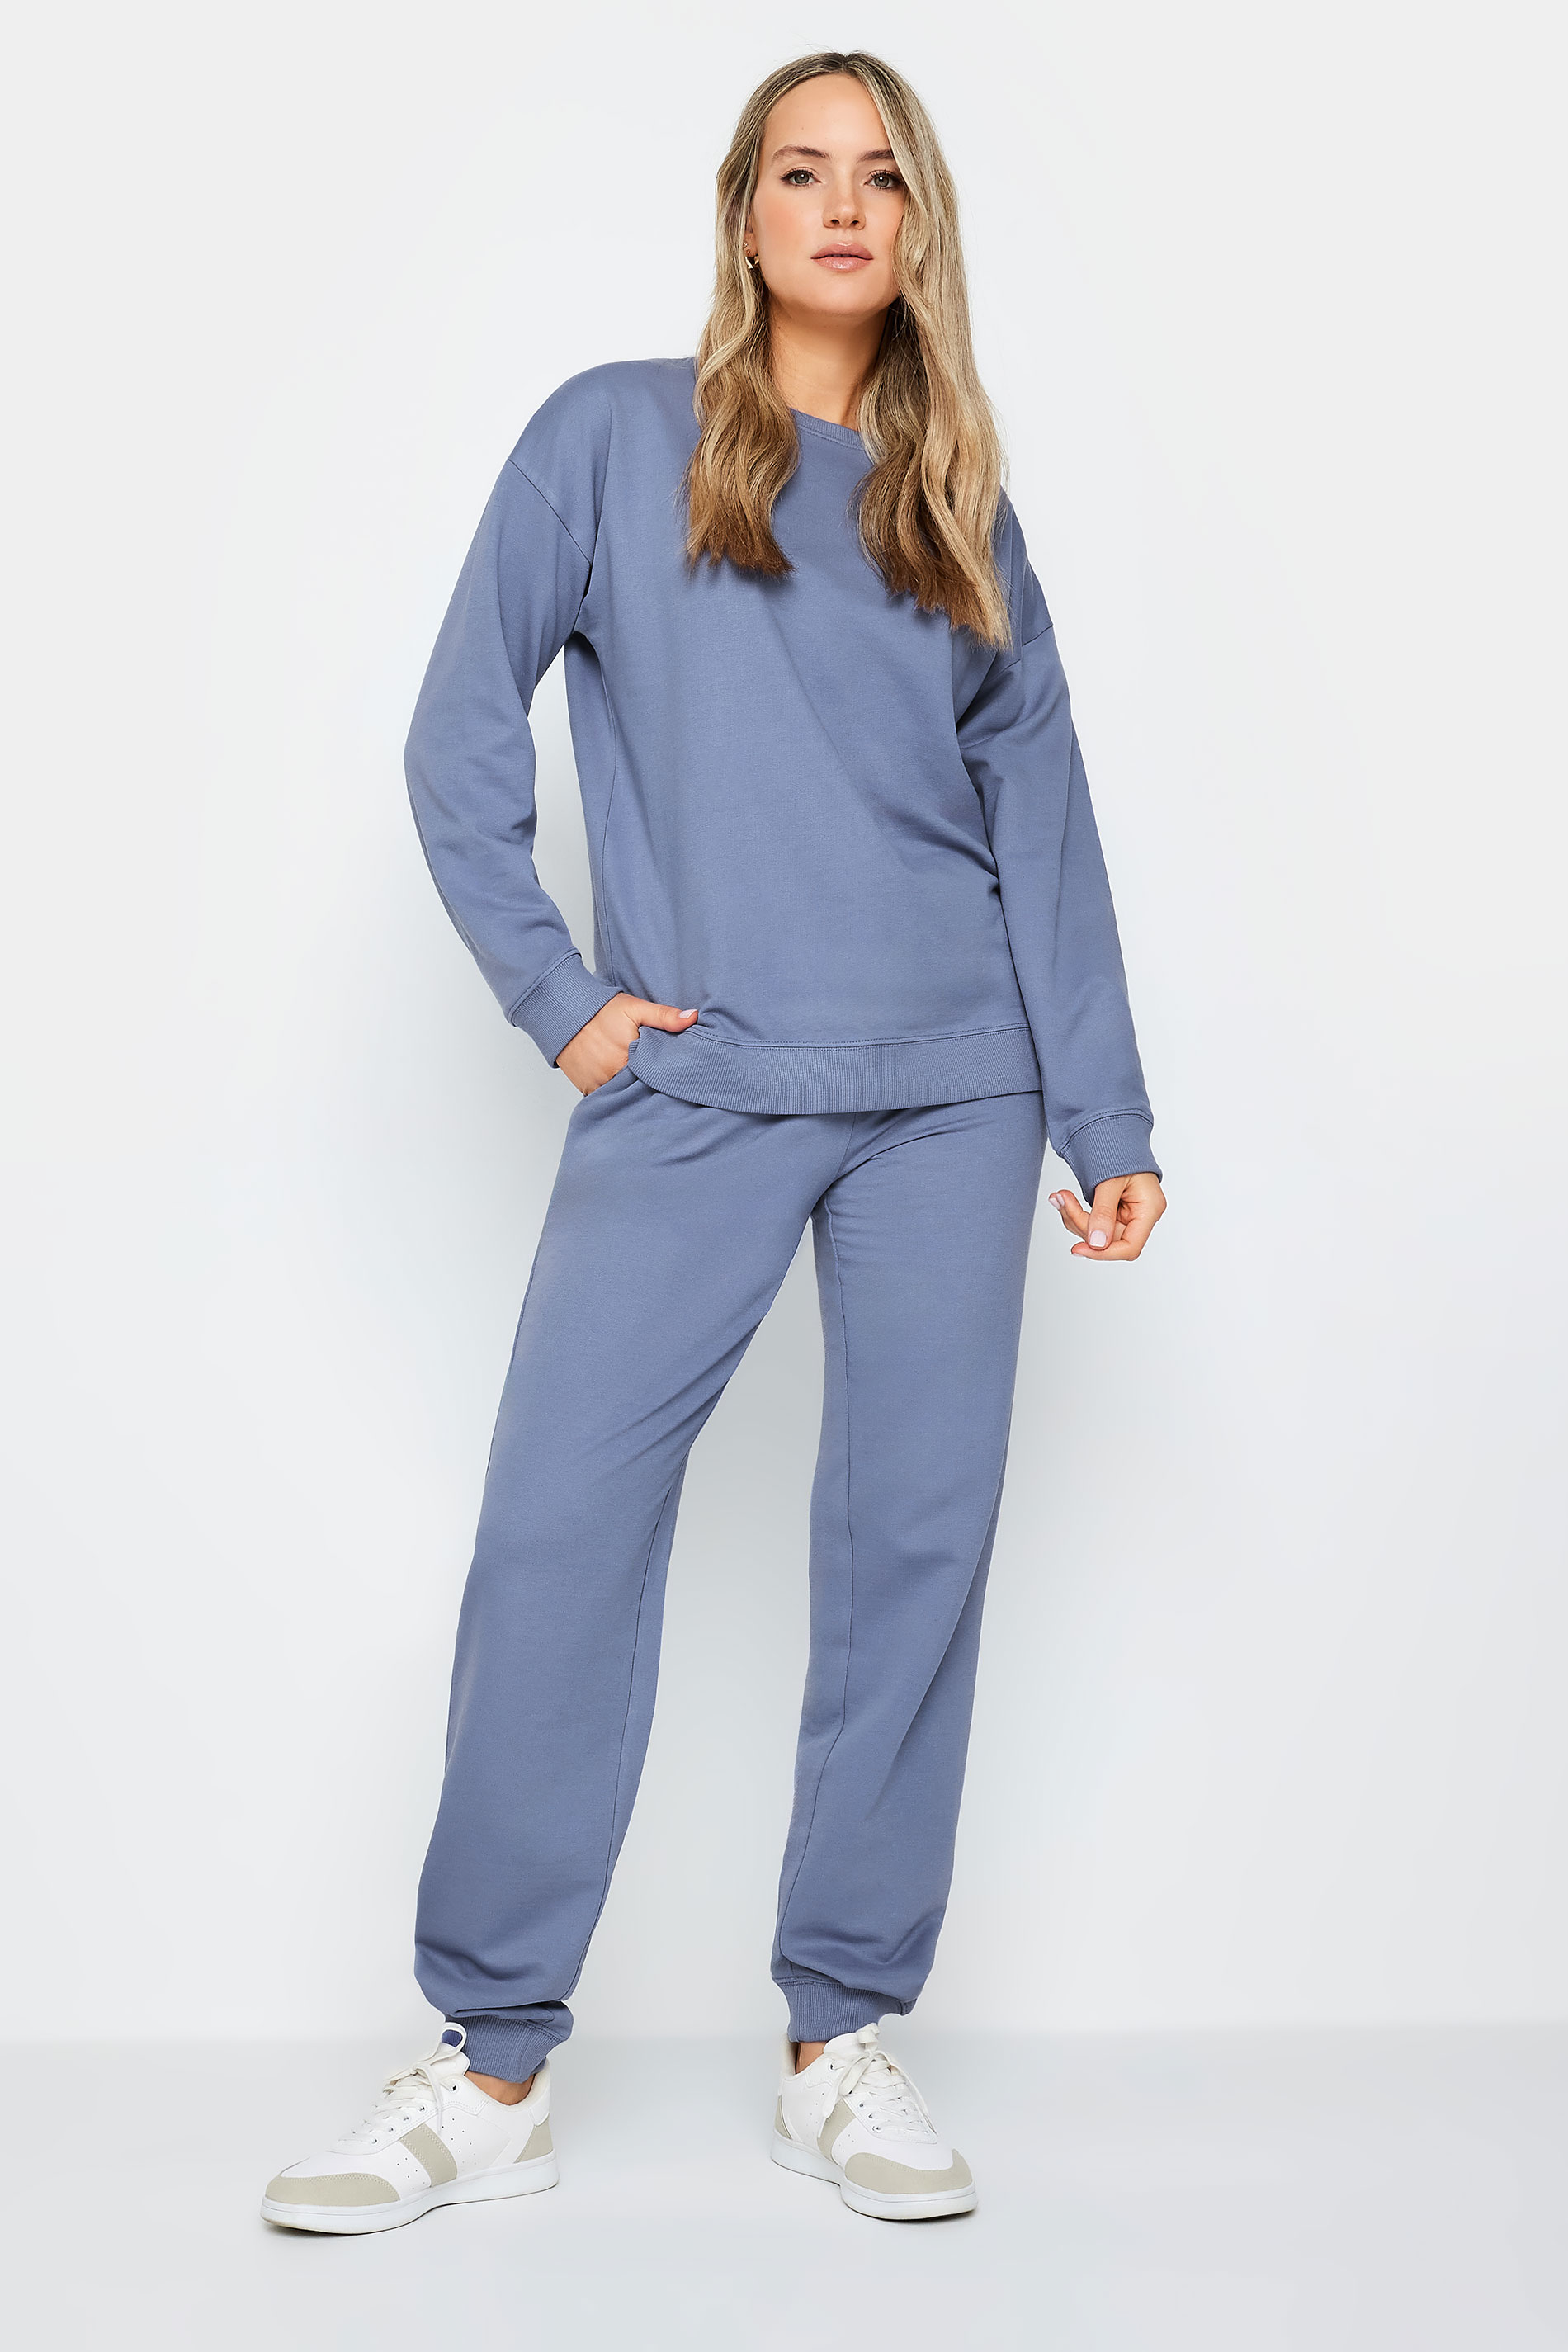 LTS Tall Women's Pale Blue Long Sleeve Sweatshirt | Long Tall Sally  2